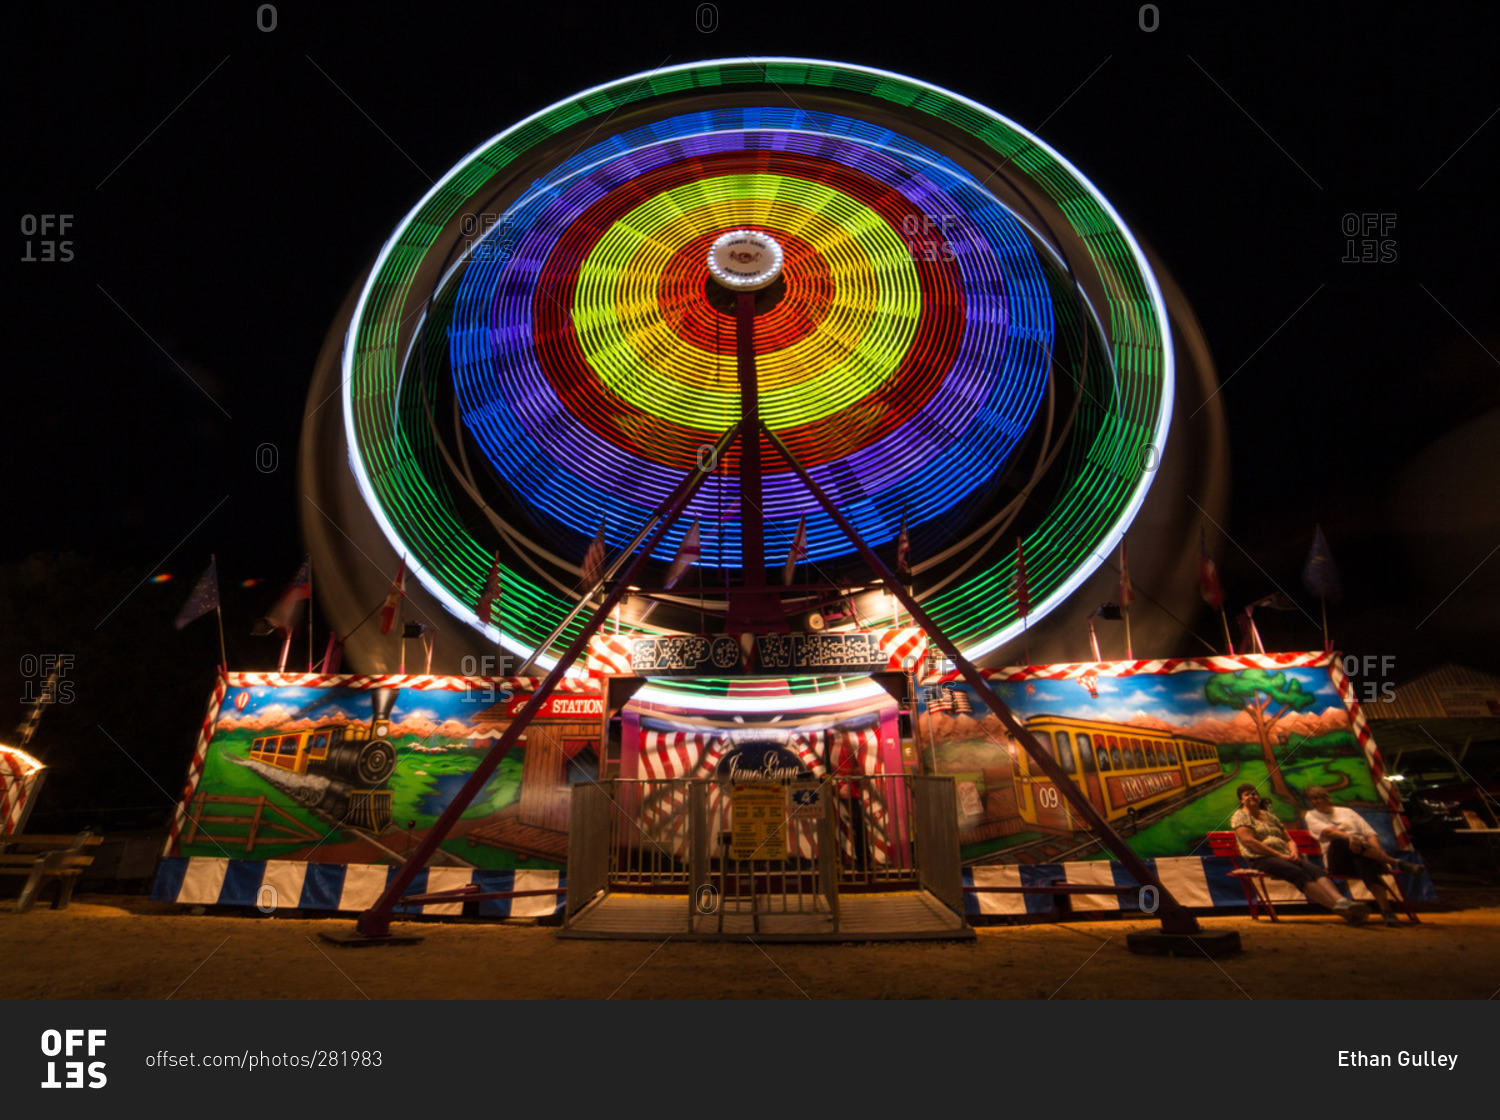 Wheel carnival ride at night